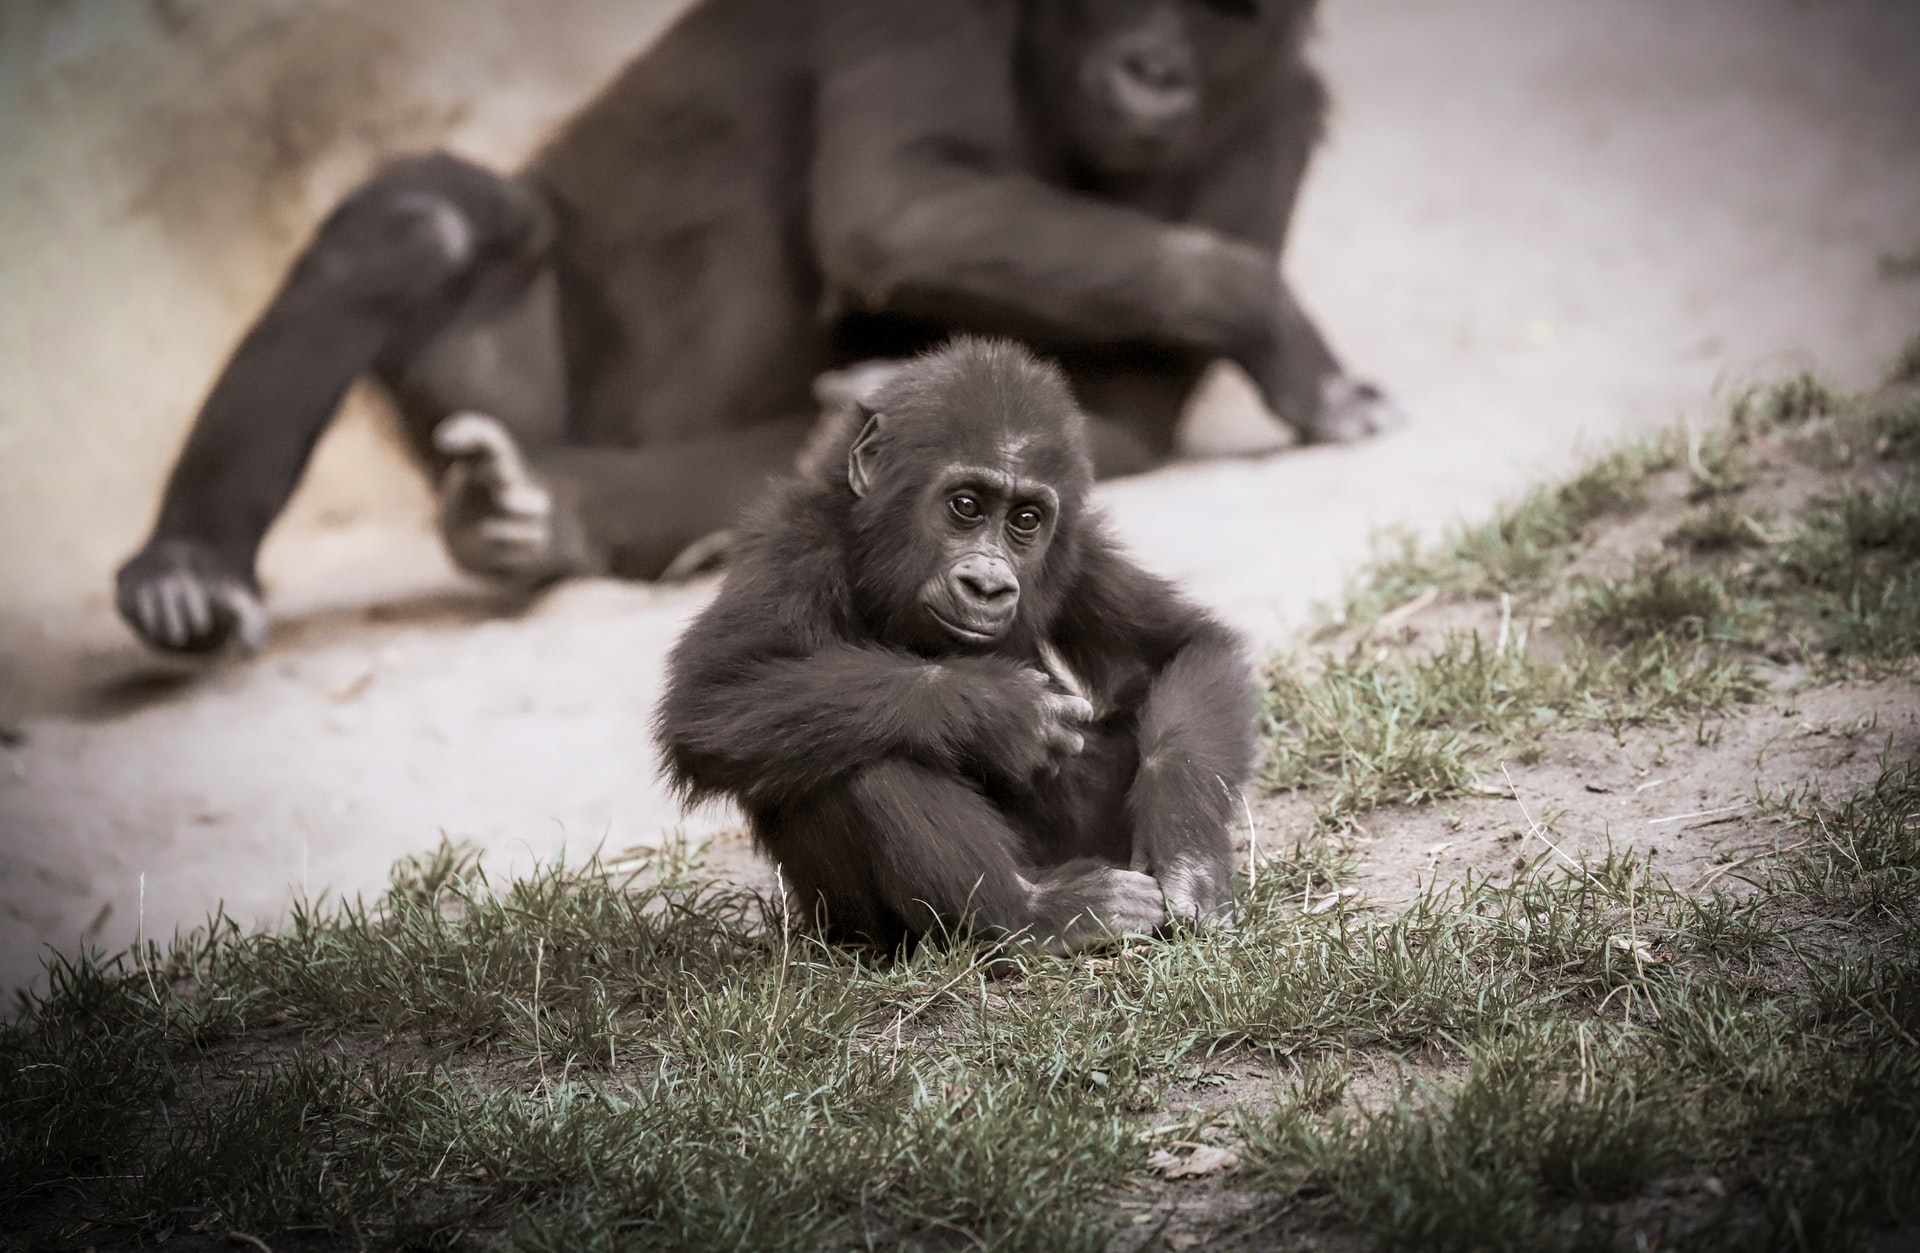 allatmentes allatvedelem fogsagban szuletett gorillak gorilla